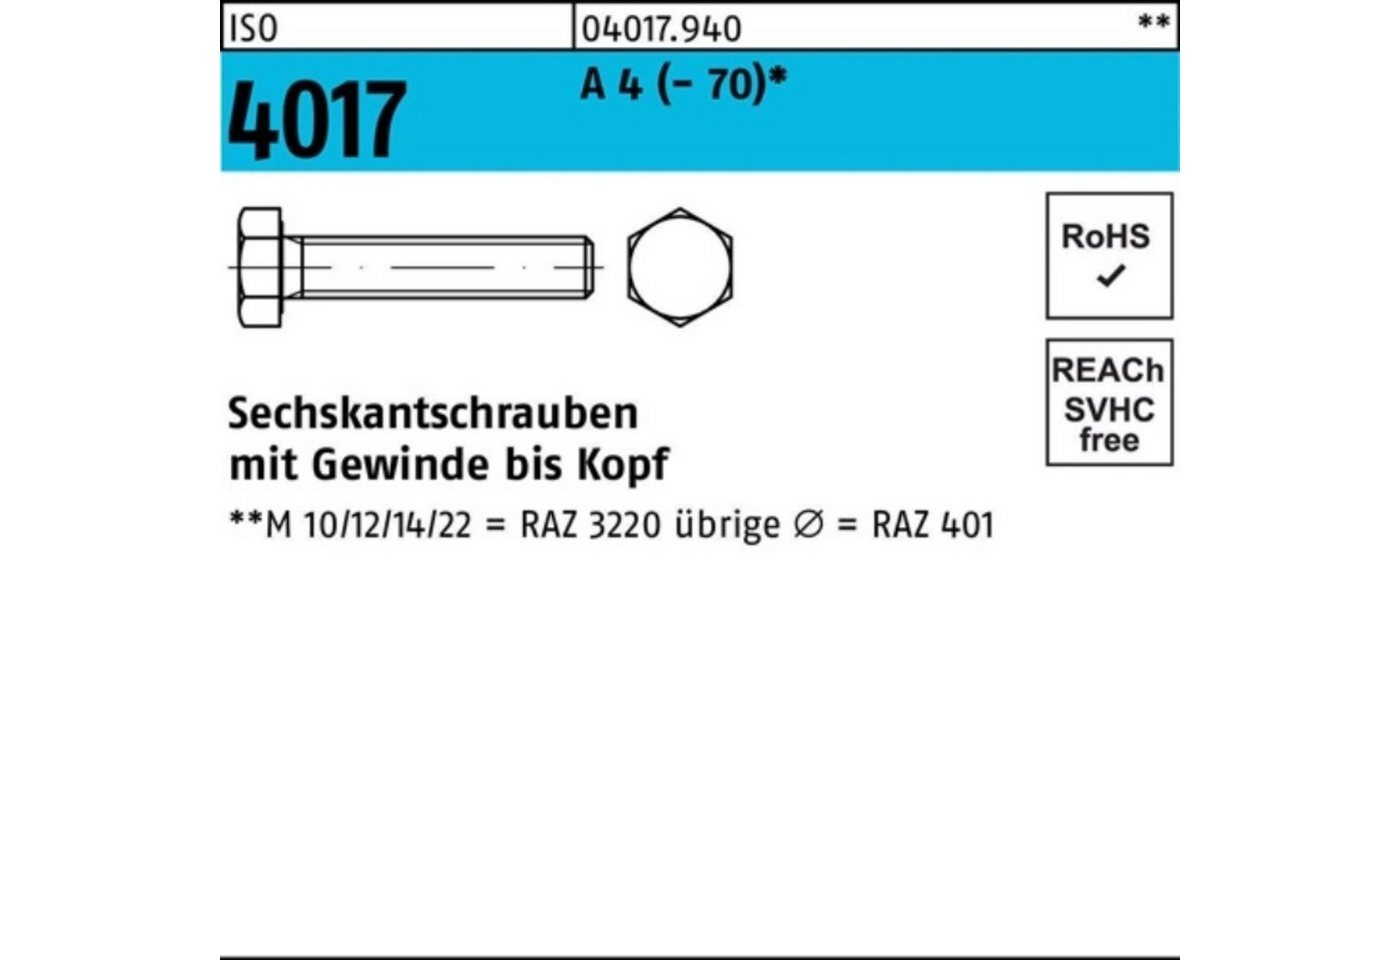 Bufab Sechskantschraube 100er Pack Sechskantschraube ISO 4017 VG M16x 60 A 4 (70) 25 Stück von Bufab